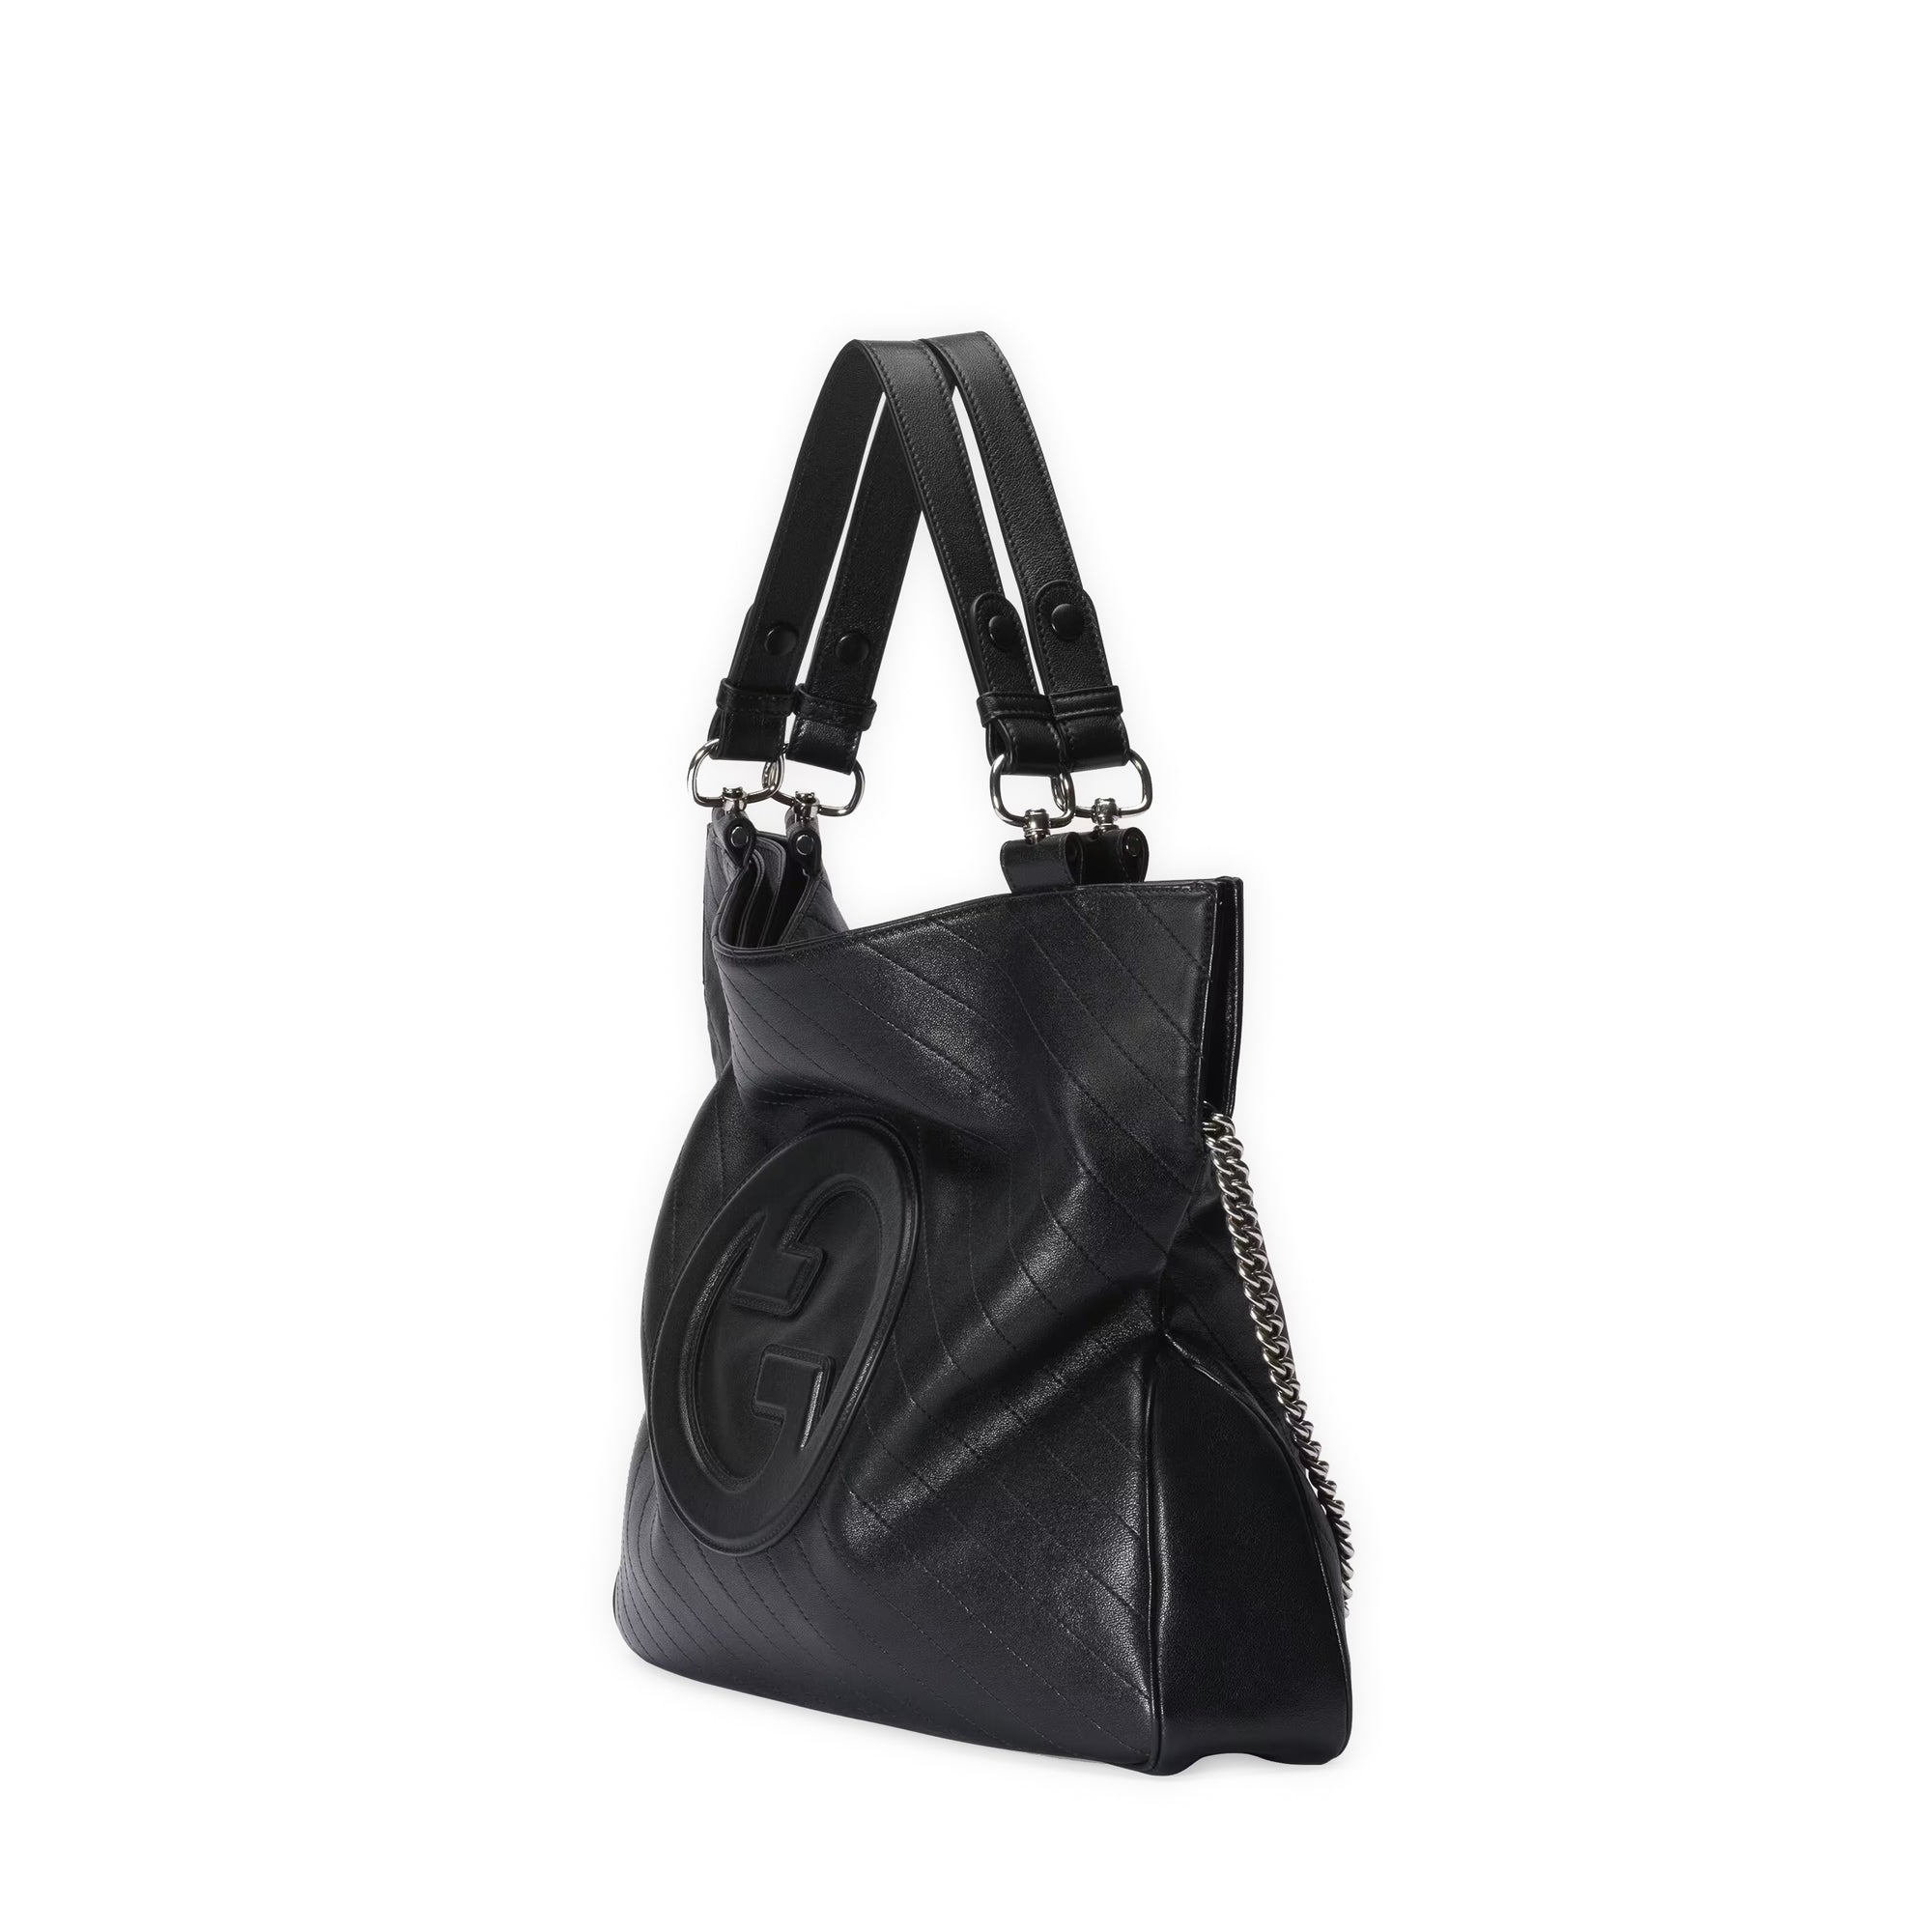 Gucci - Women’s Blondie Medium Tote Bag - (Black) view 2